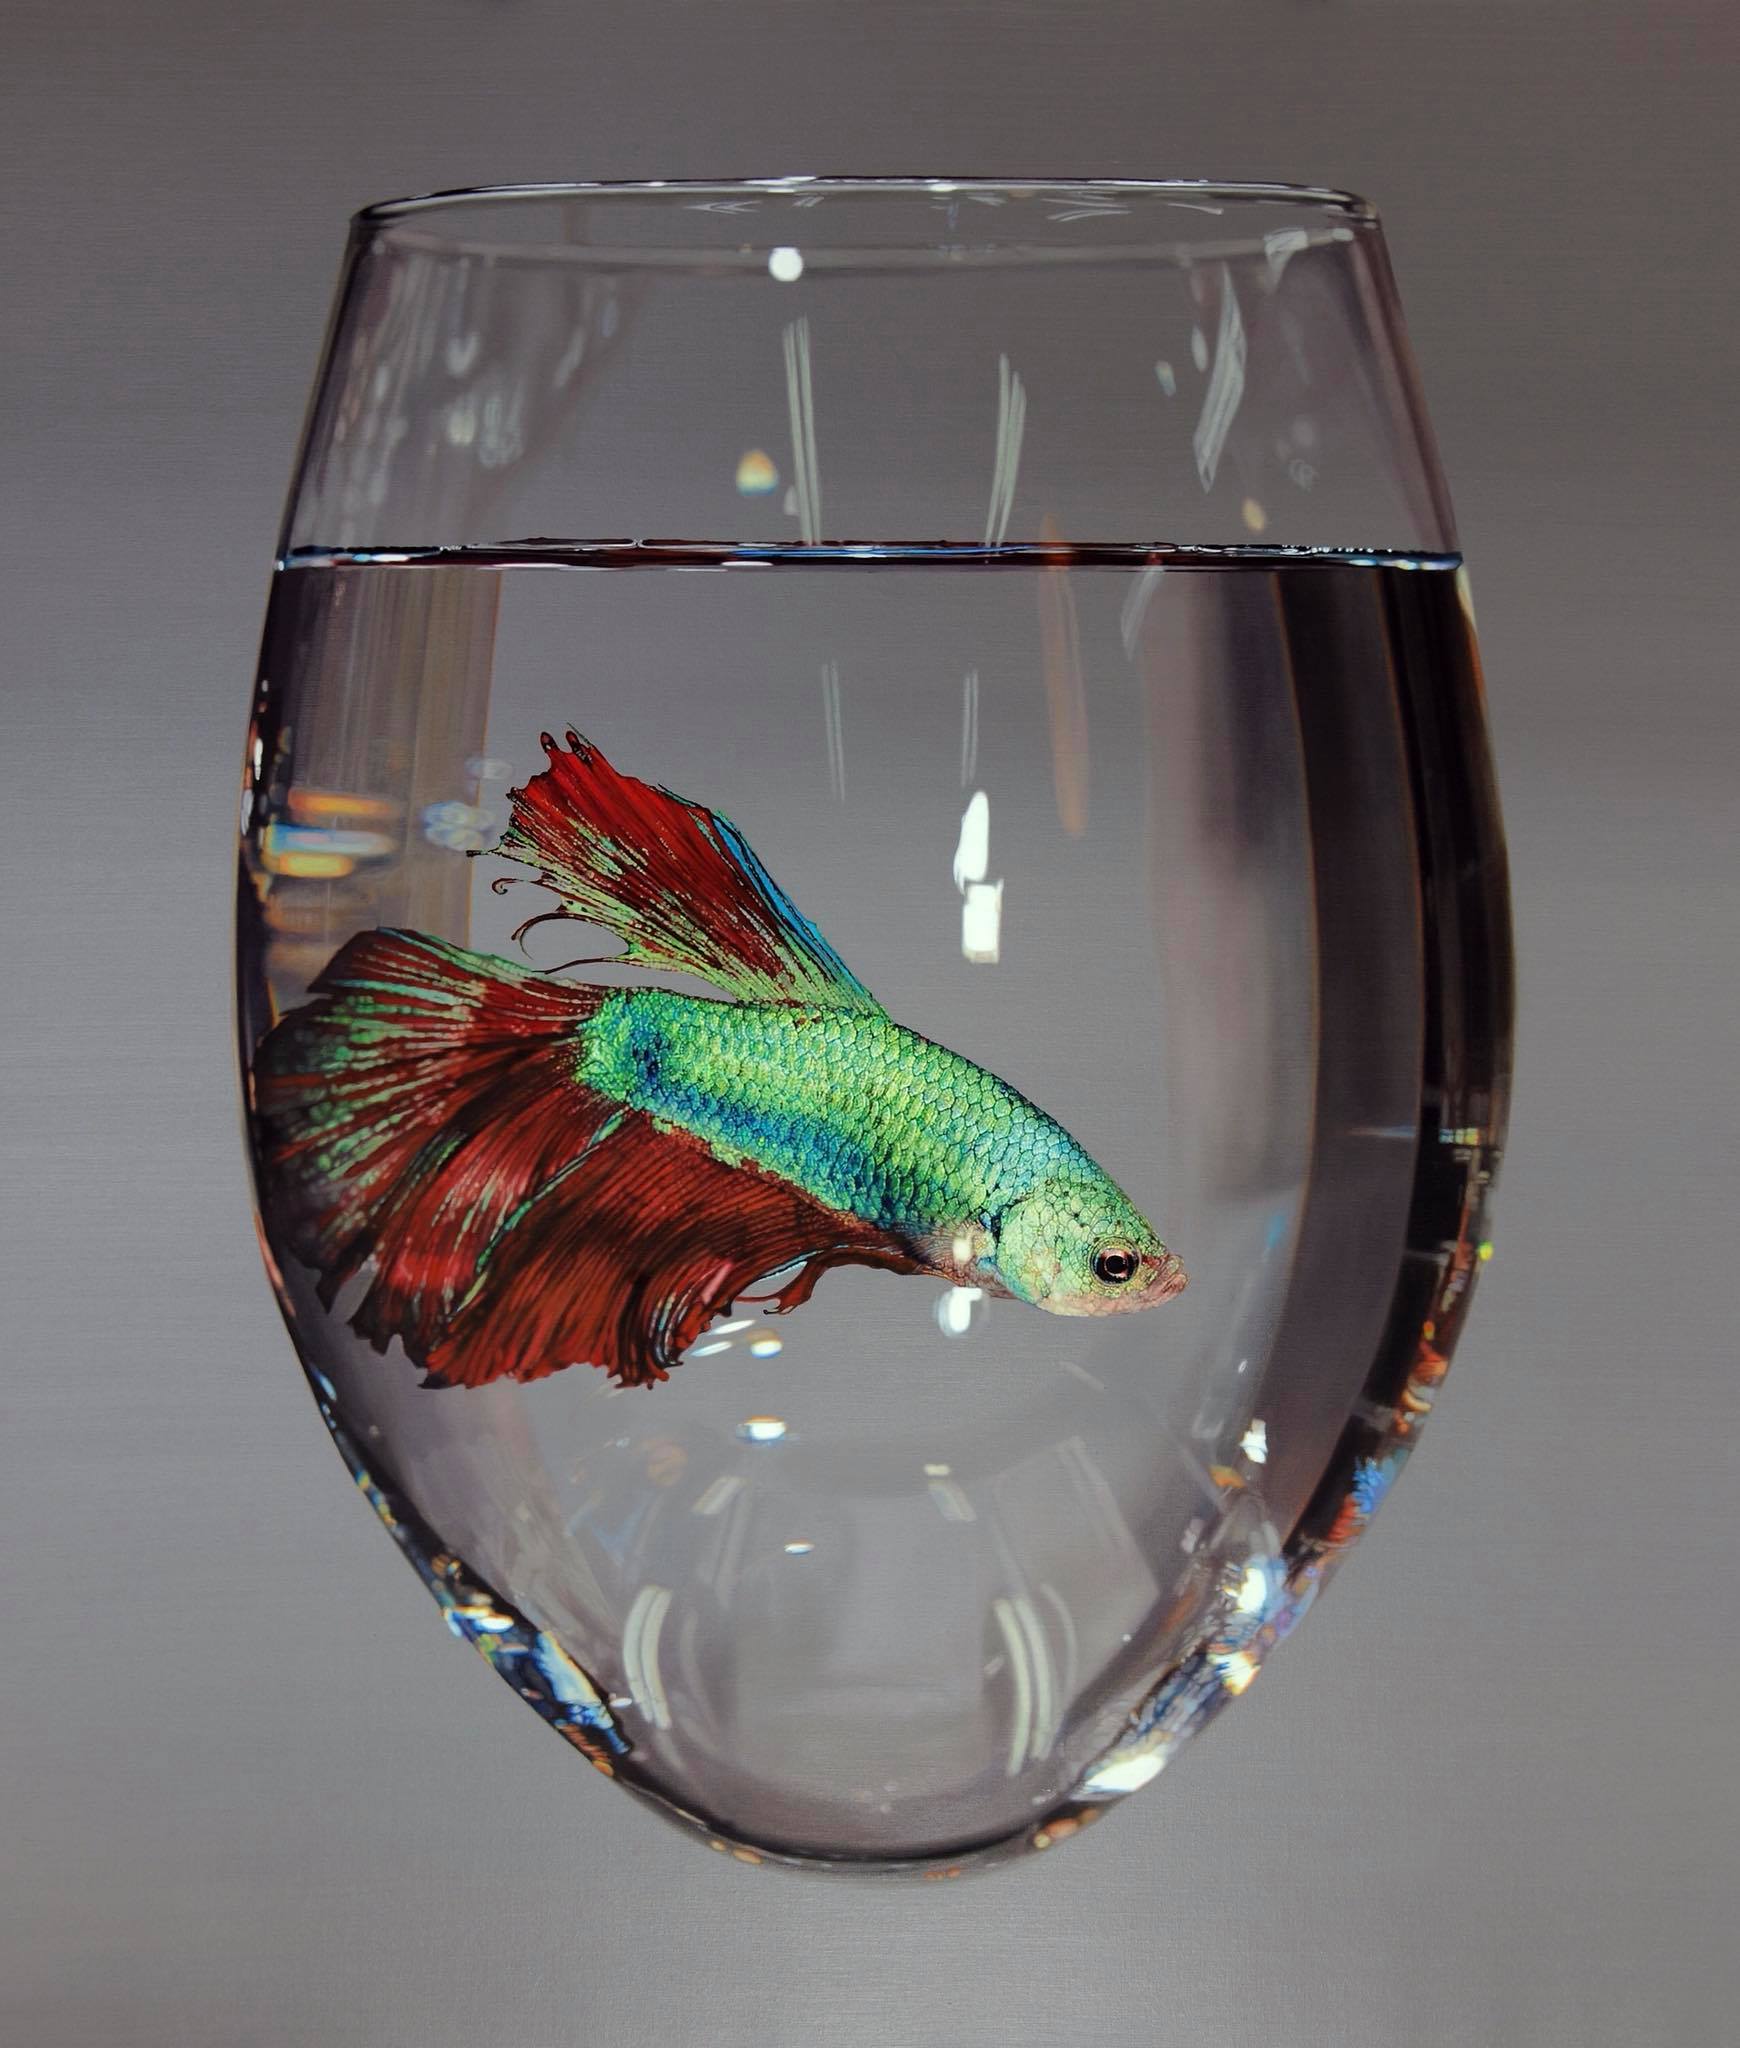 hyper realistic paintings fish